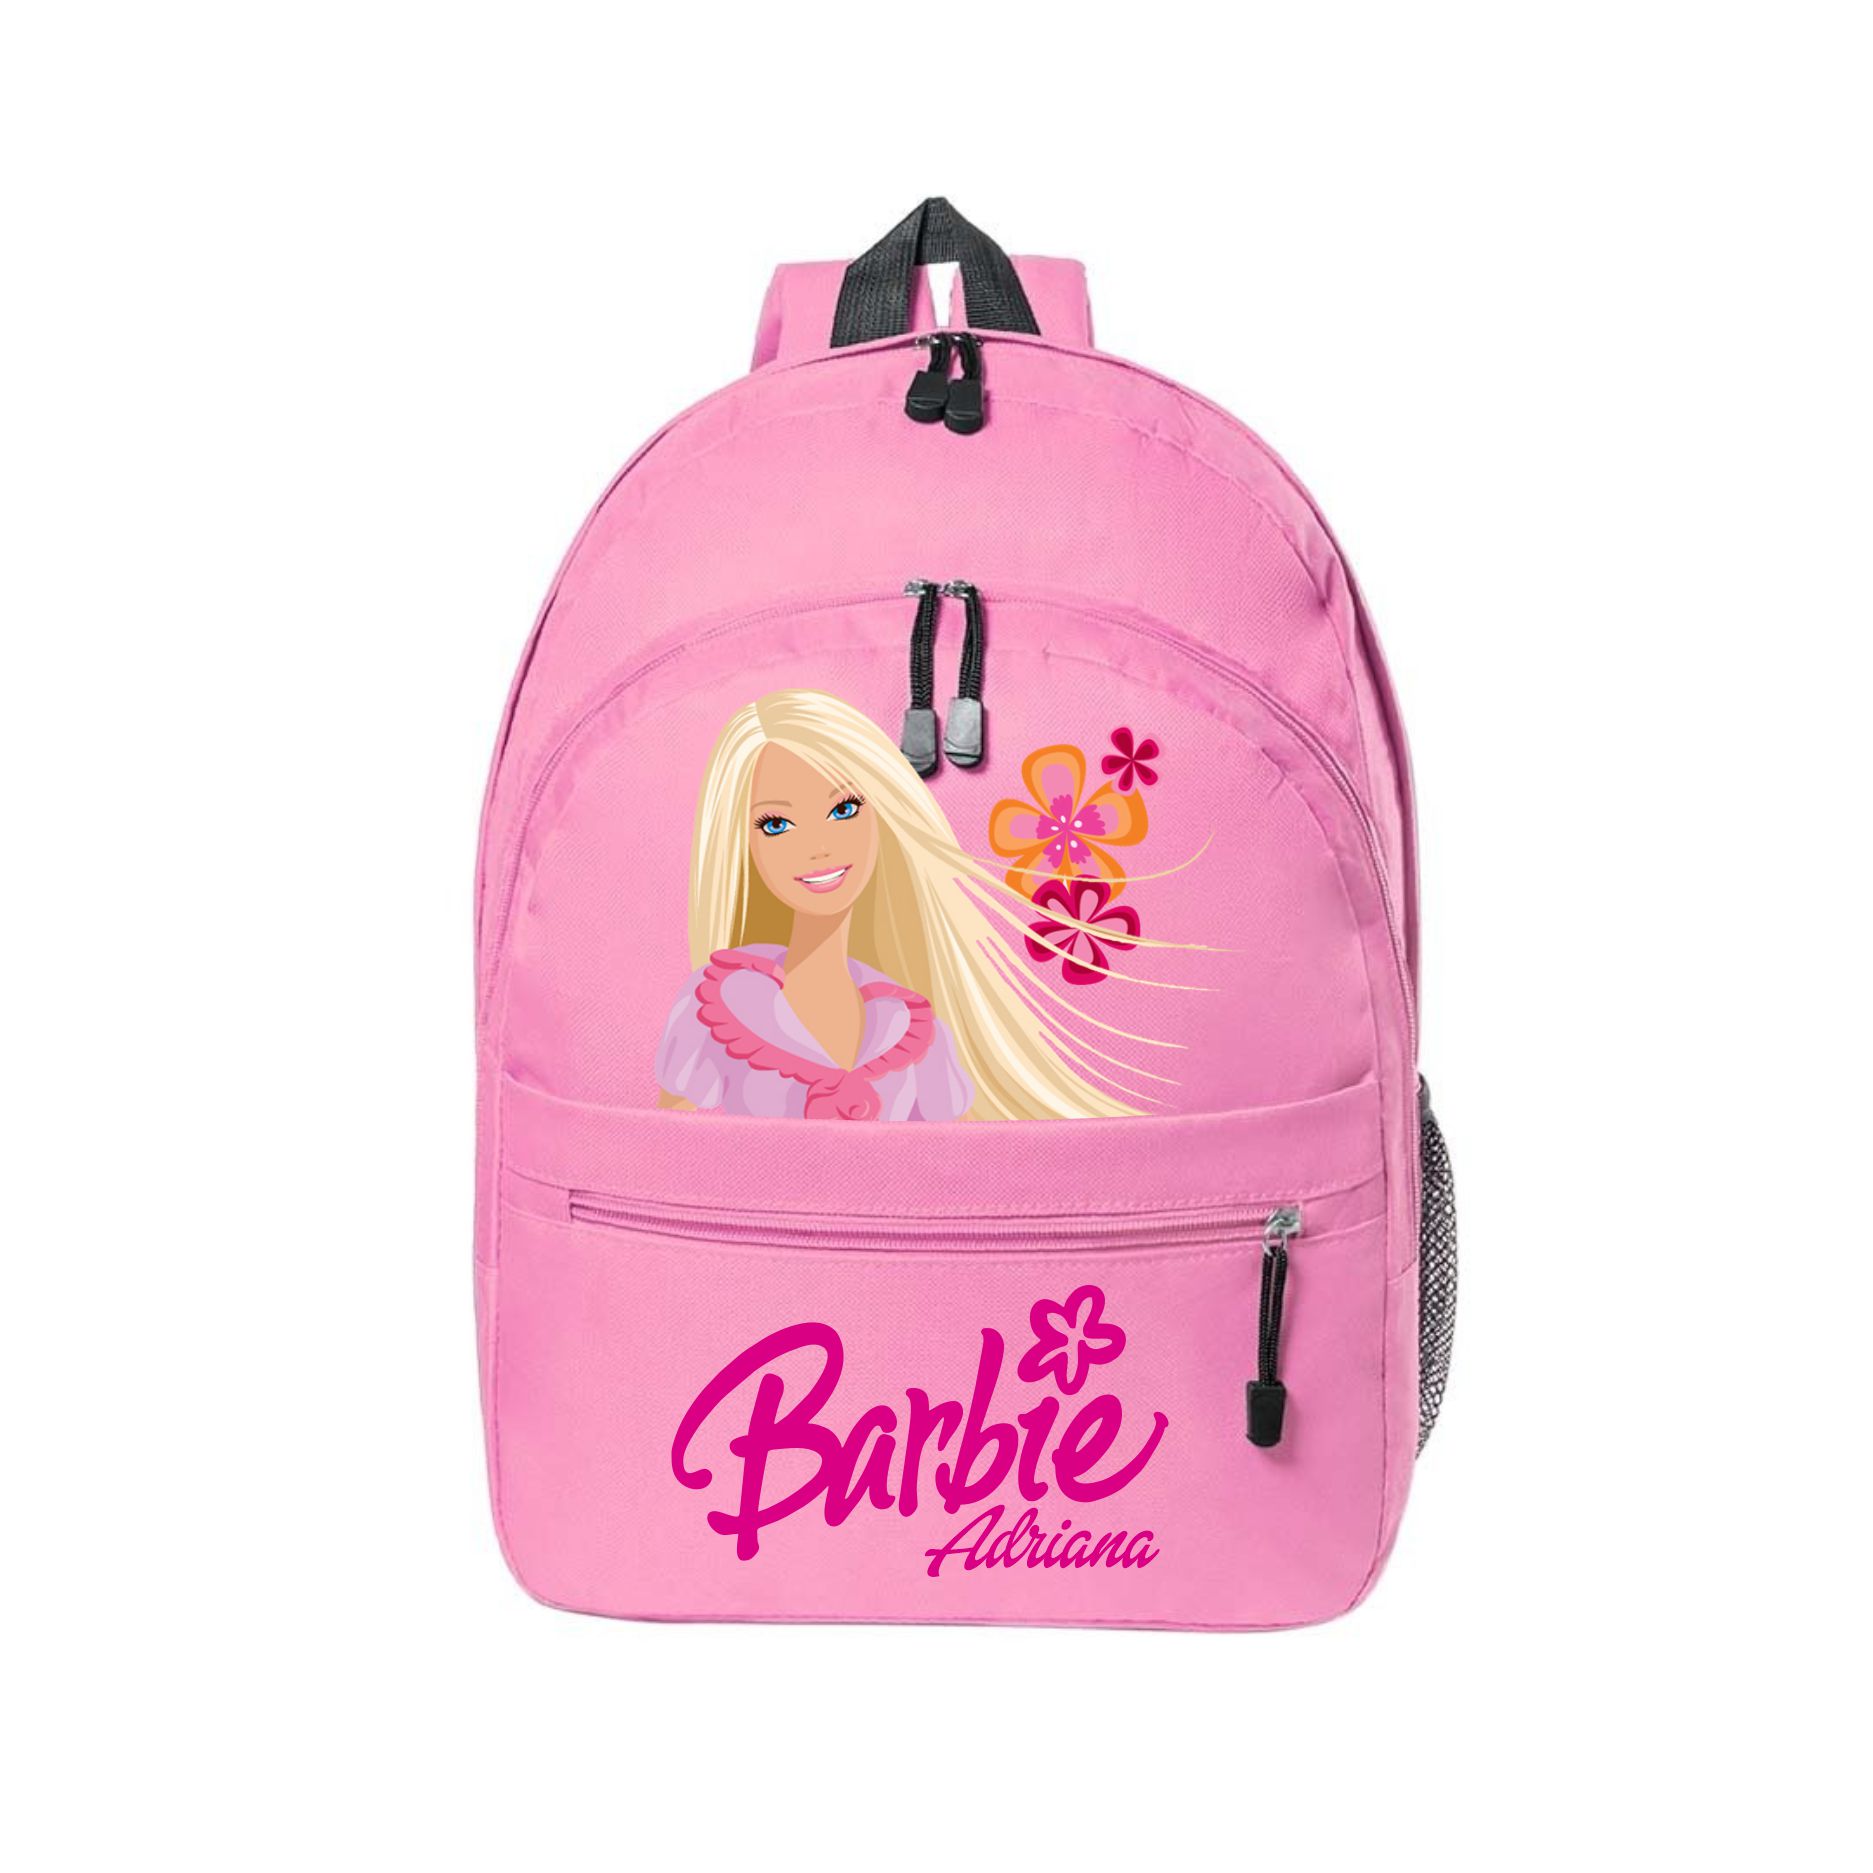 Estores Iroa  Mochila Barbie infantil, mochila Barbie niña